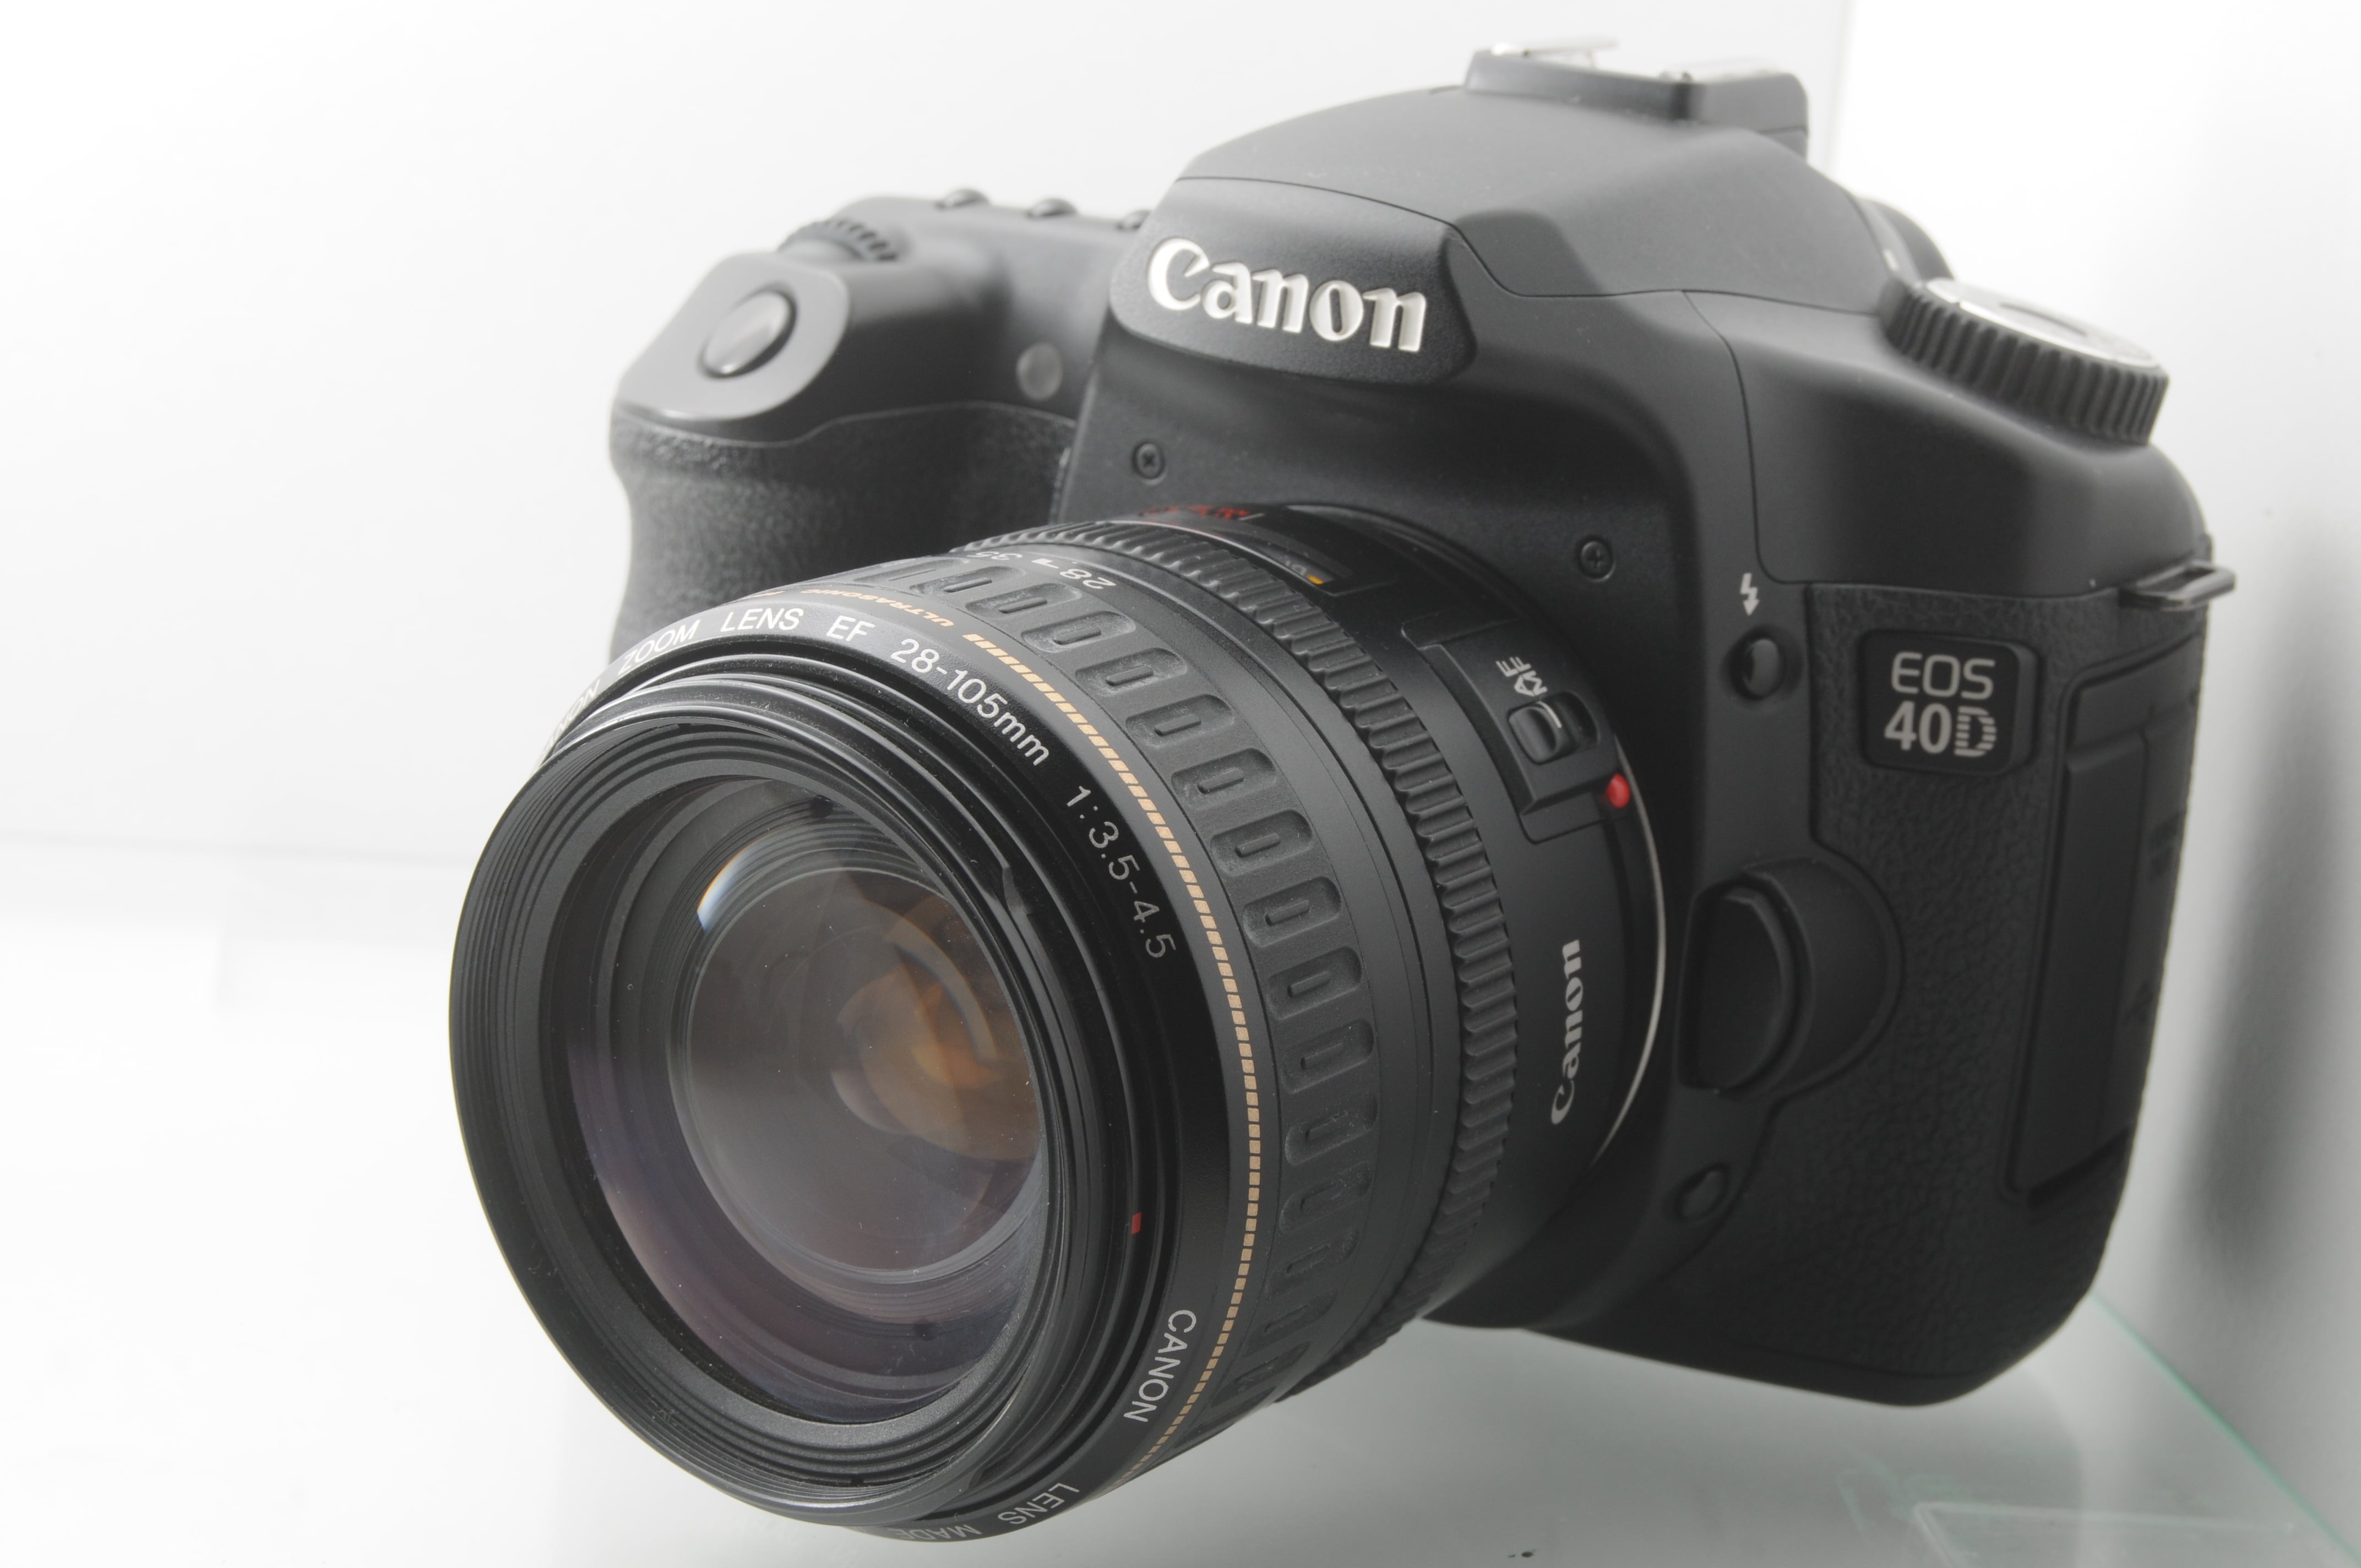 Canon EOS50D  EF 28-105mm USM